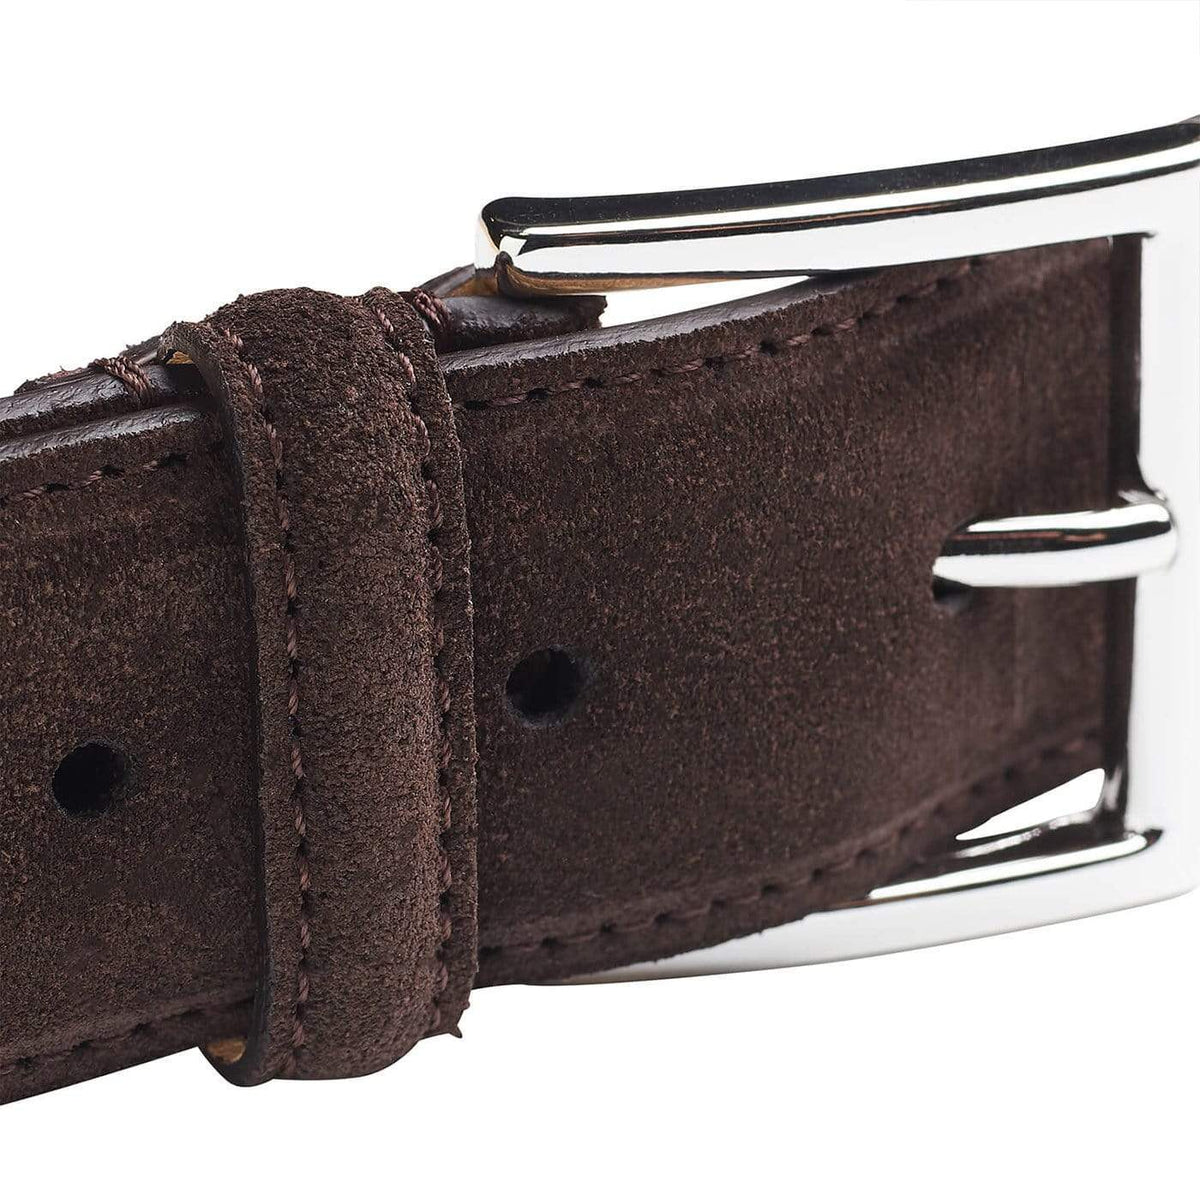 Crockett & Jones Dark Brown Woven Calf Leather Belts by Bodileys English  Made Men's Belts